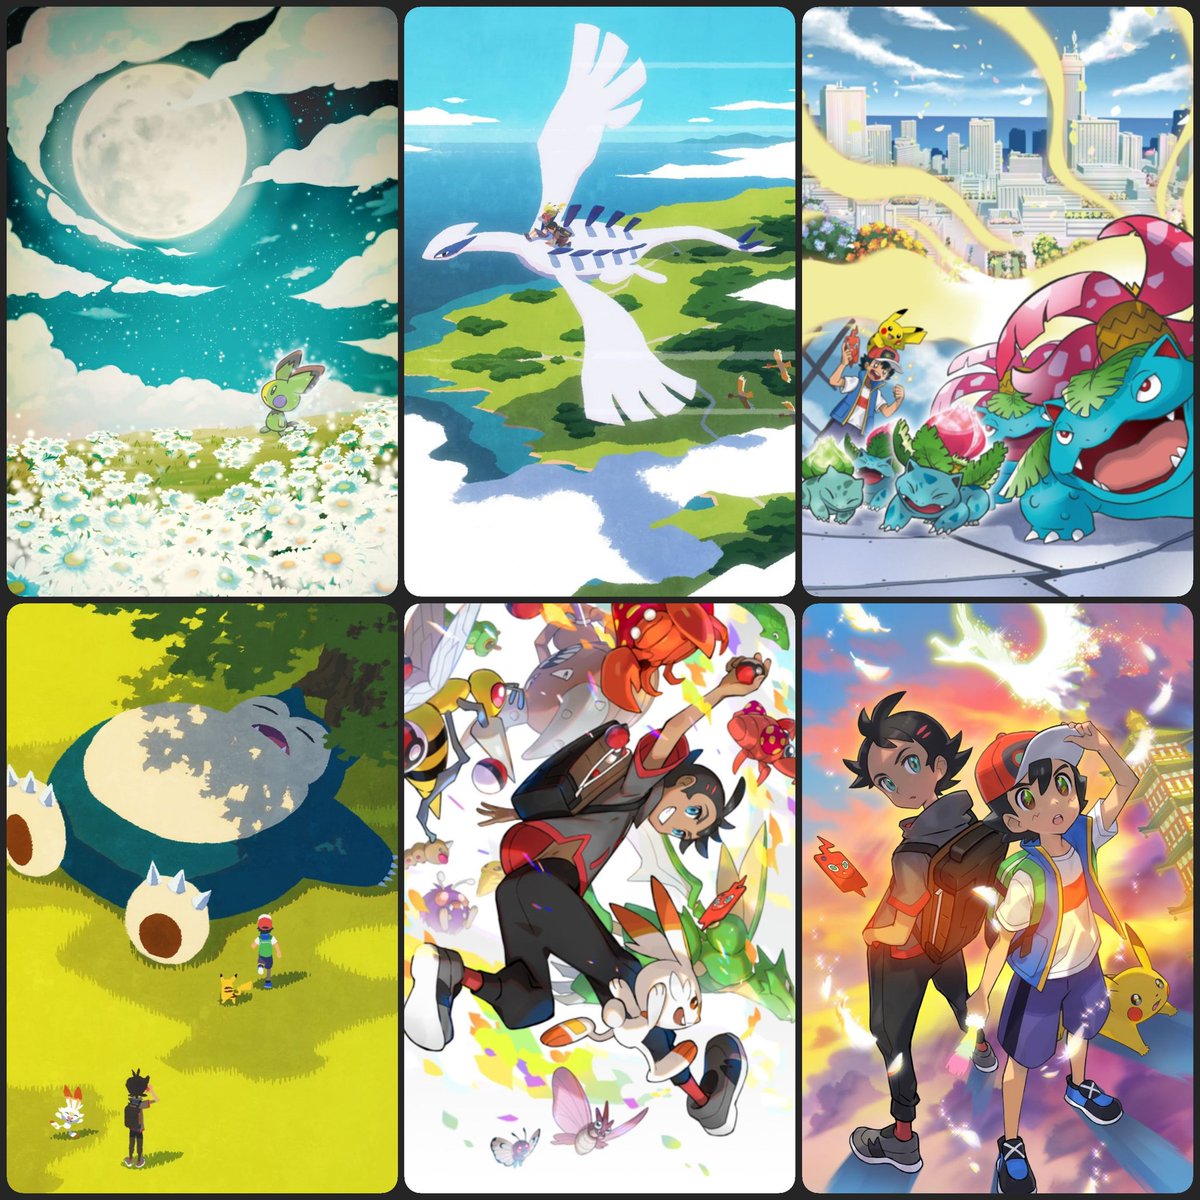 ✨Remember these posters~✨

#Anipoke #pokemon